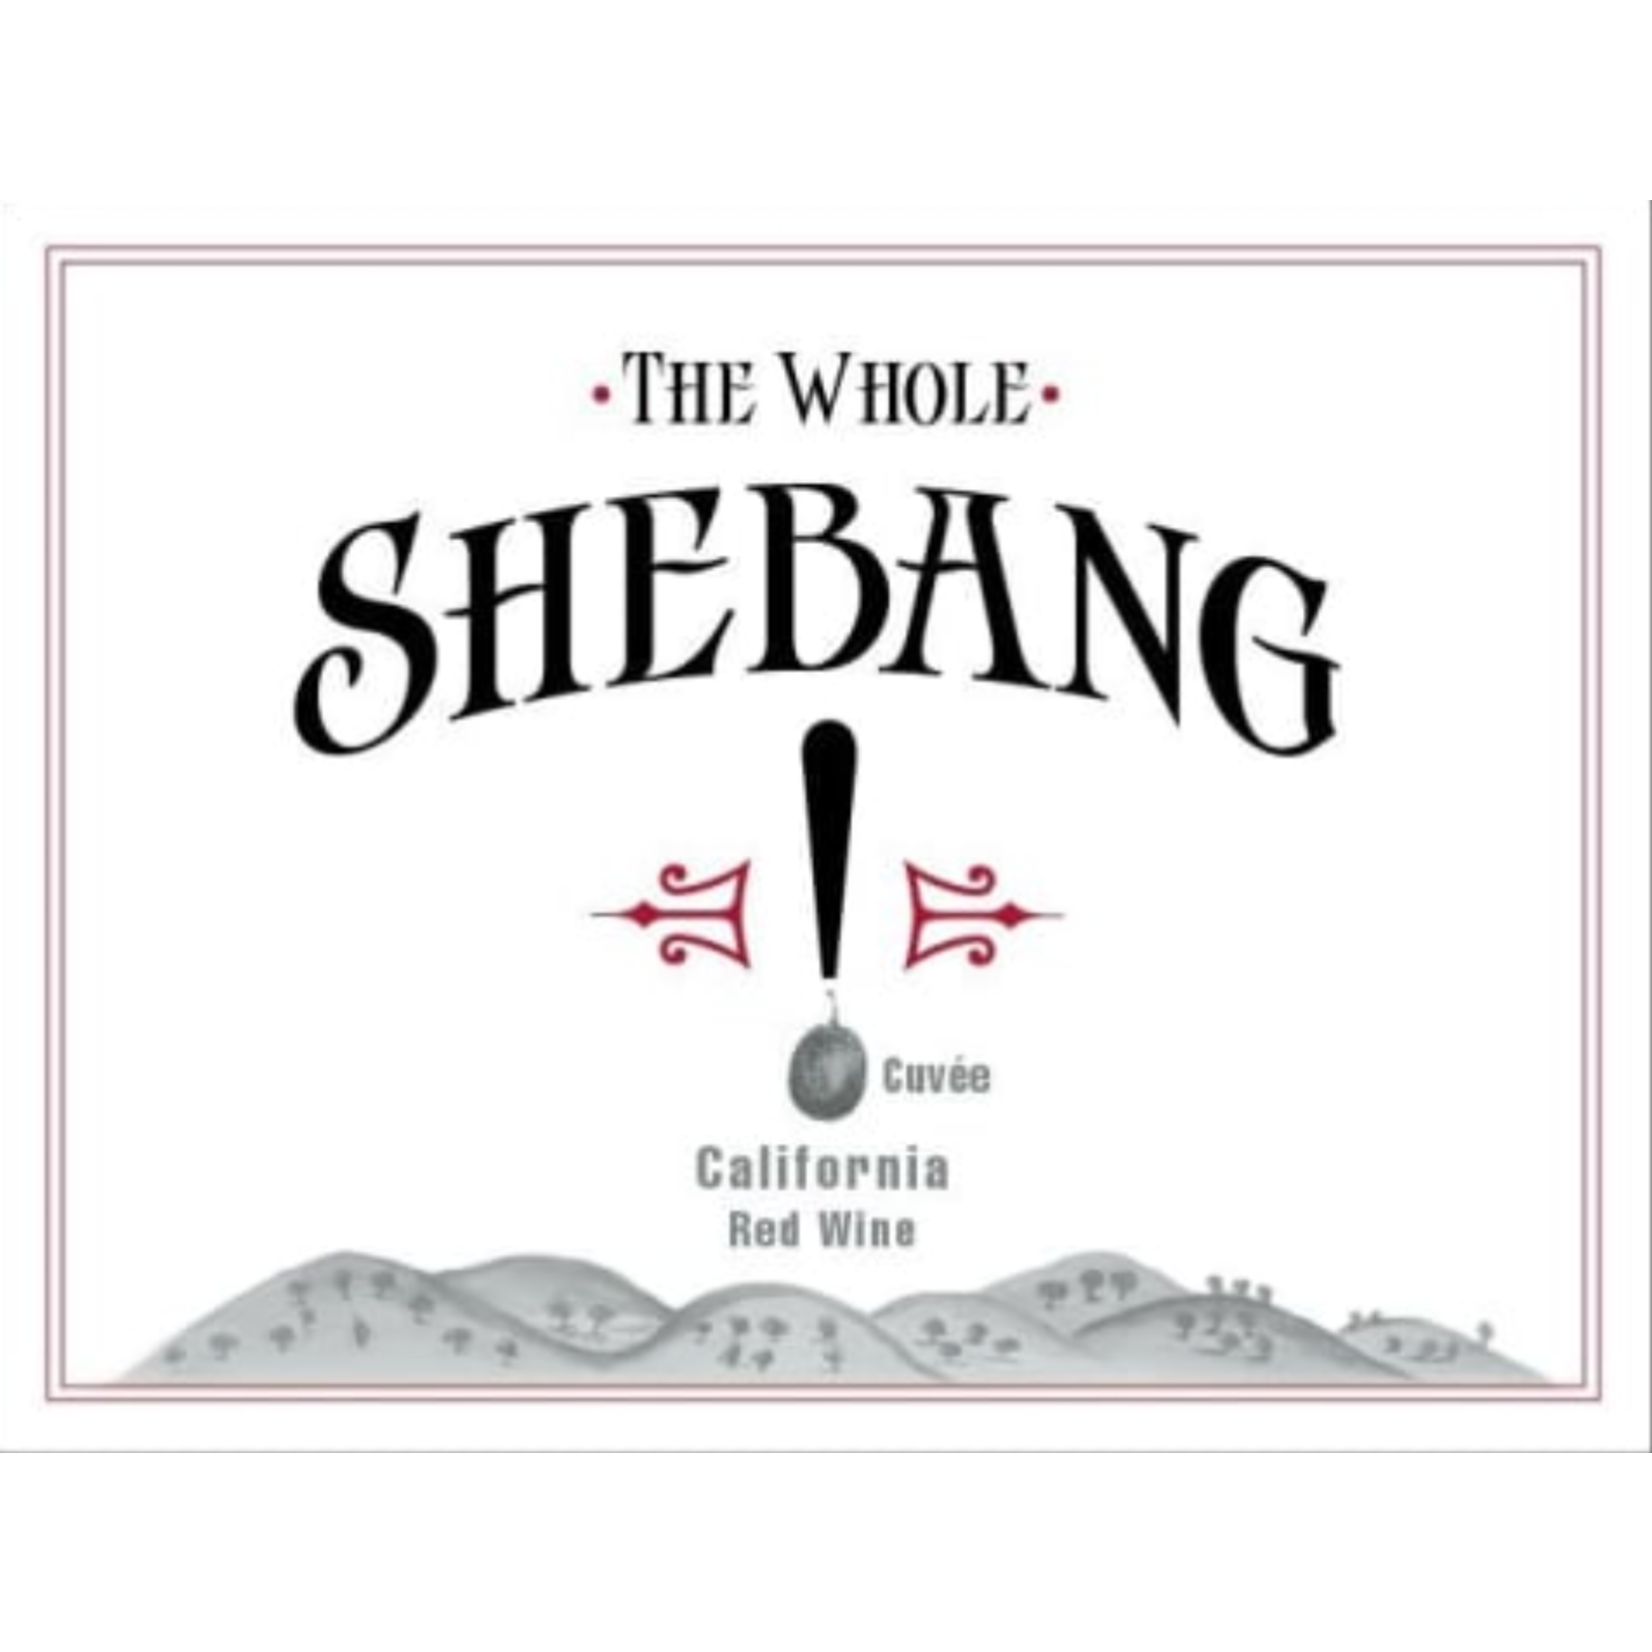 Shebang! Wines The Whole Shebang Thirteenth Cuvee Red Wine  Sonoma, California